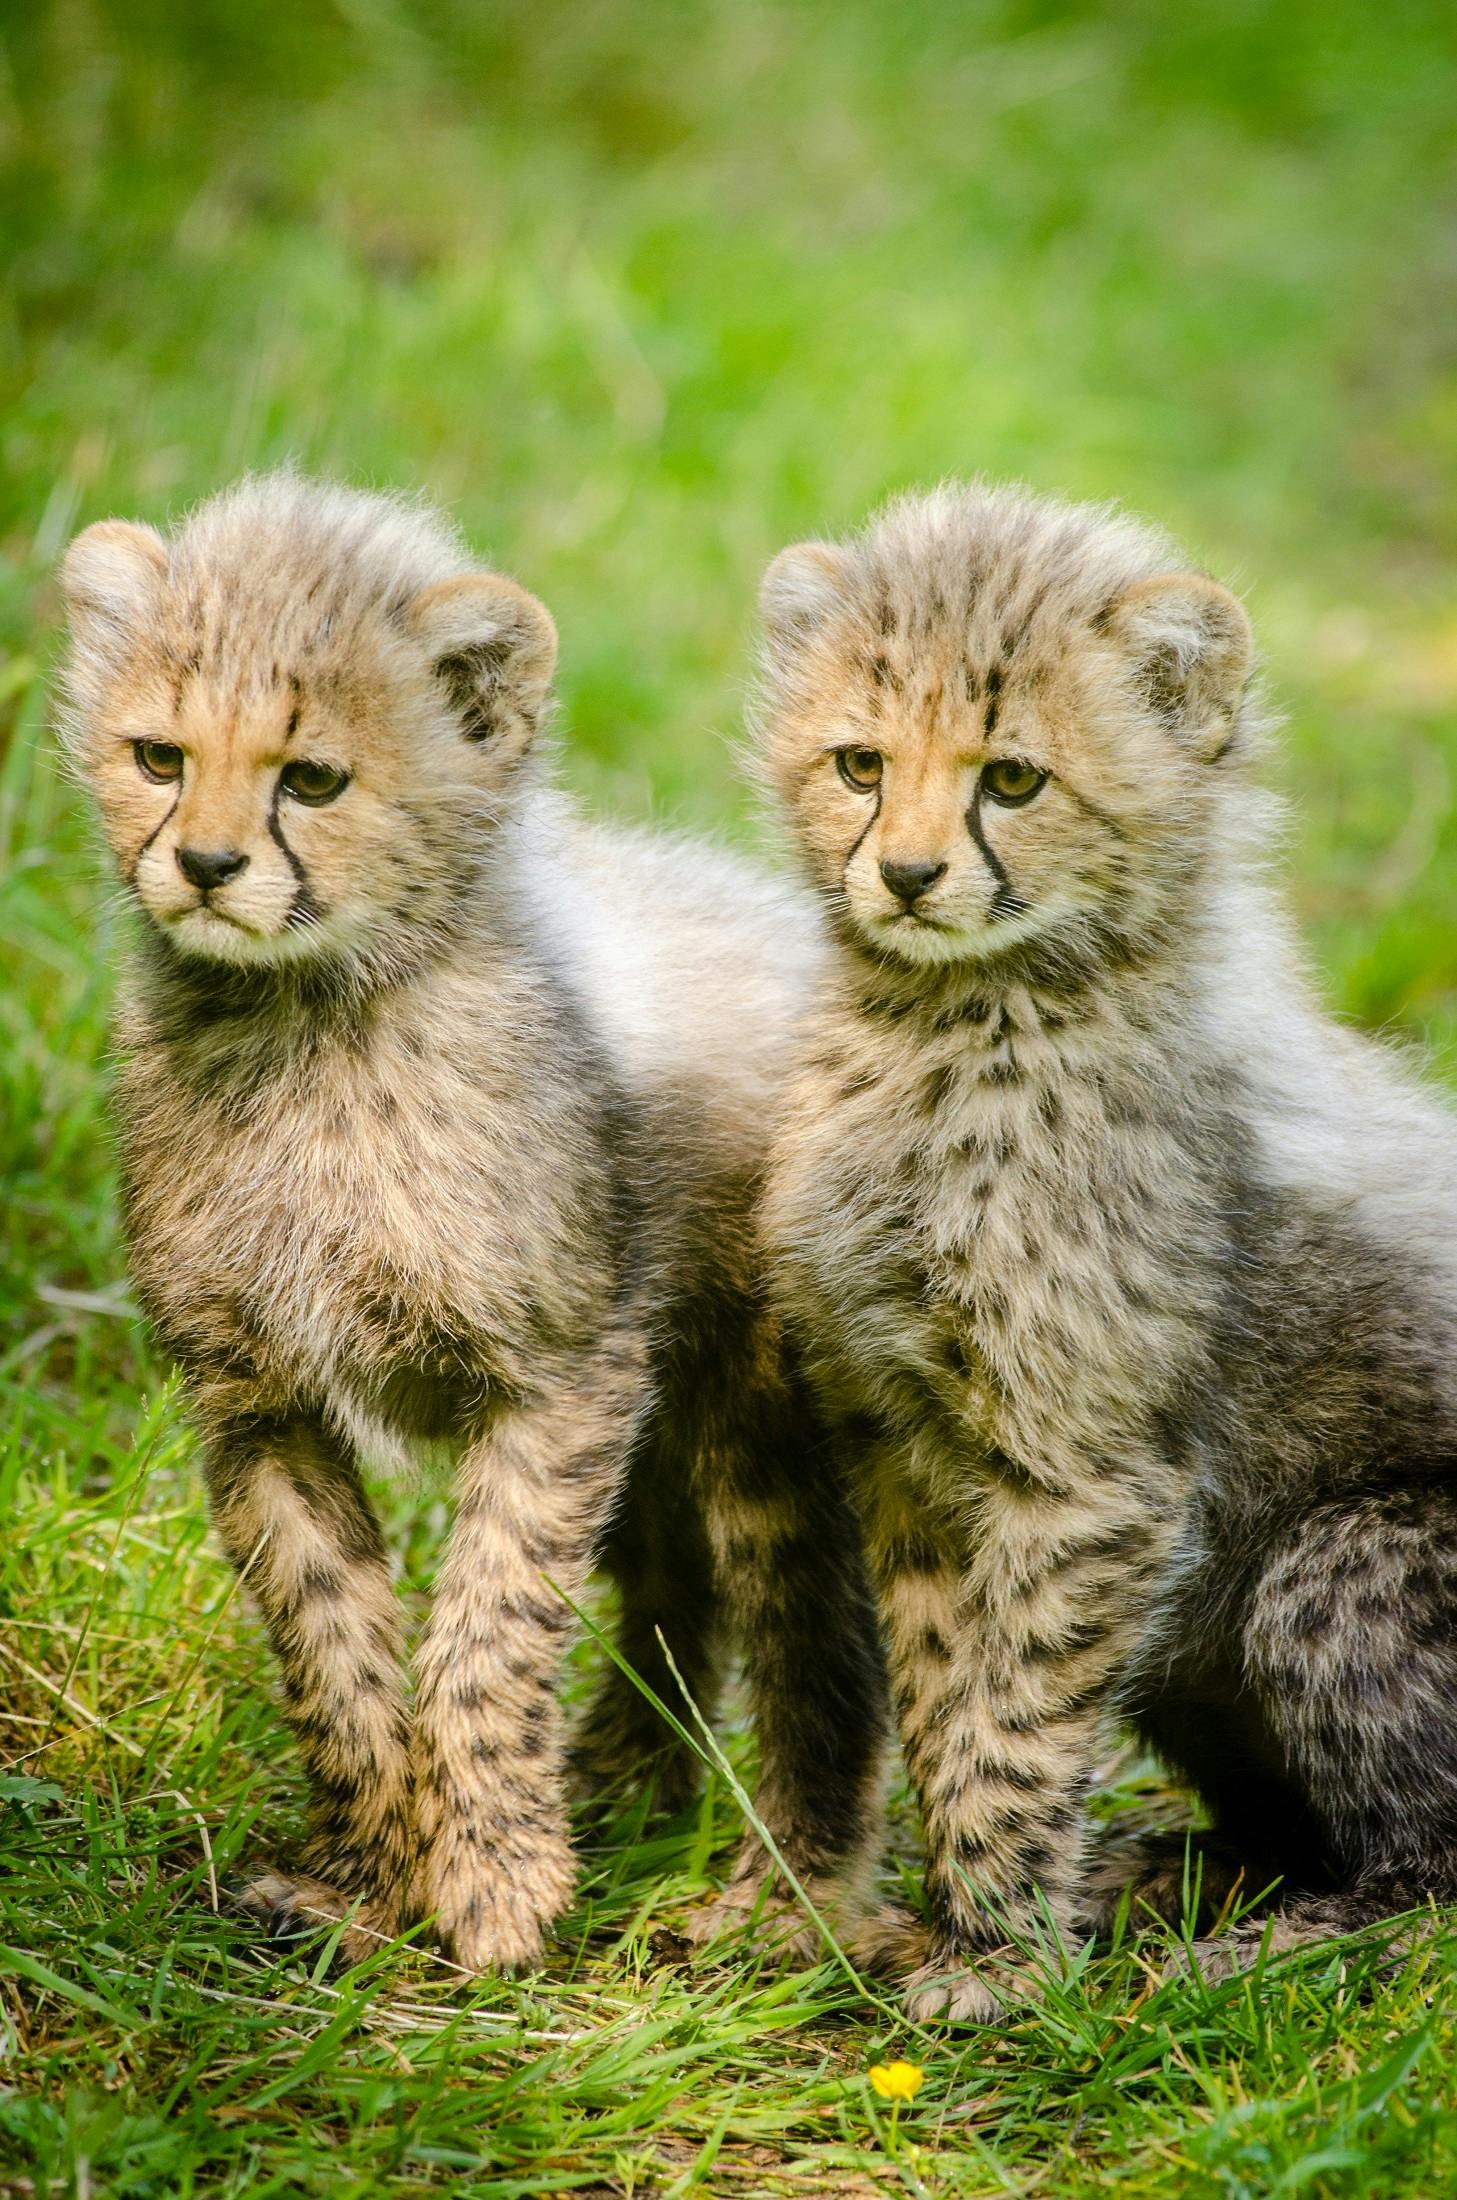 1000 Great Wild Animals Photos · Pexels · Free Stock Photos